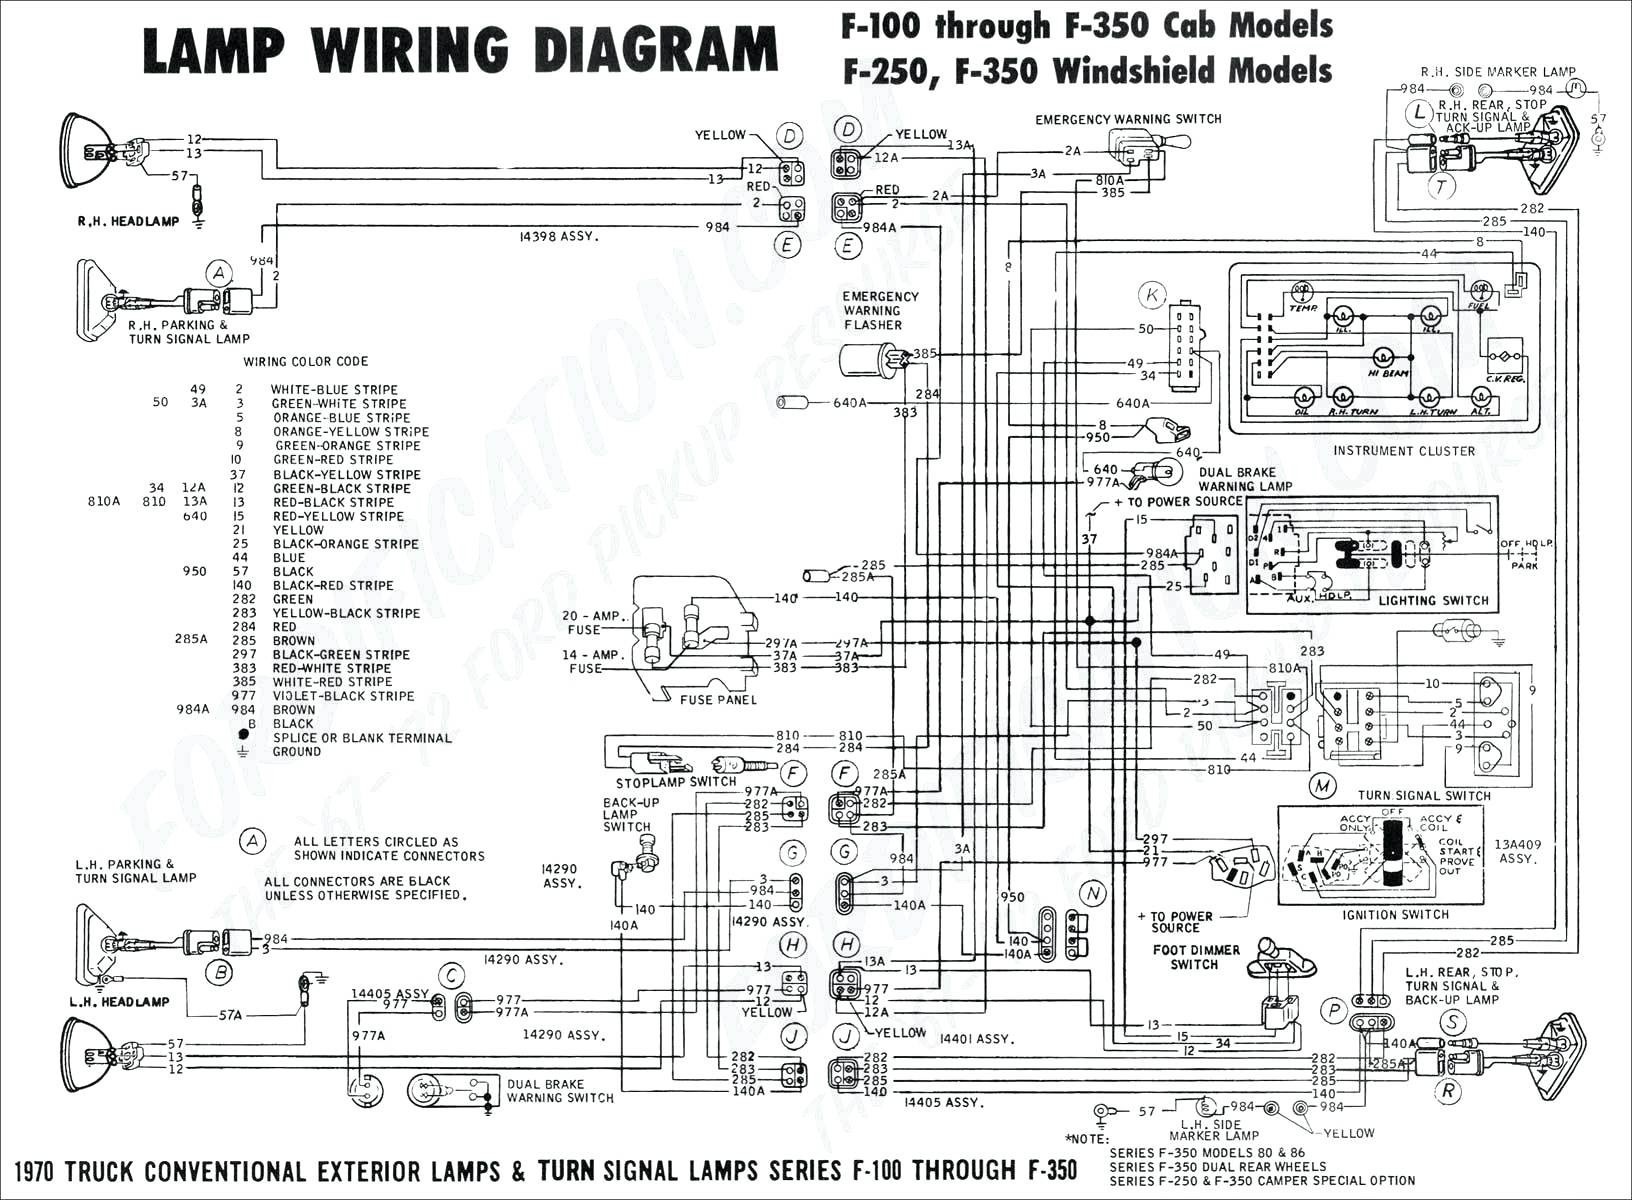 2010 Chevy Aveo Engine Diagram Karr Wiring Diagram Versa Daily Update Wiring Diagram Of 2010 Chevy Aveo Engine Diagram